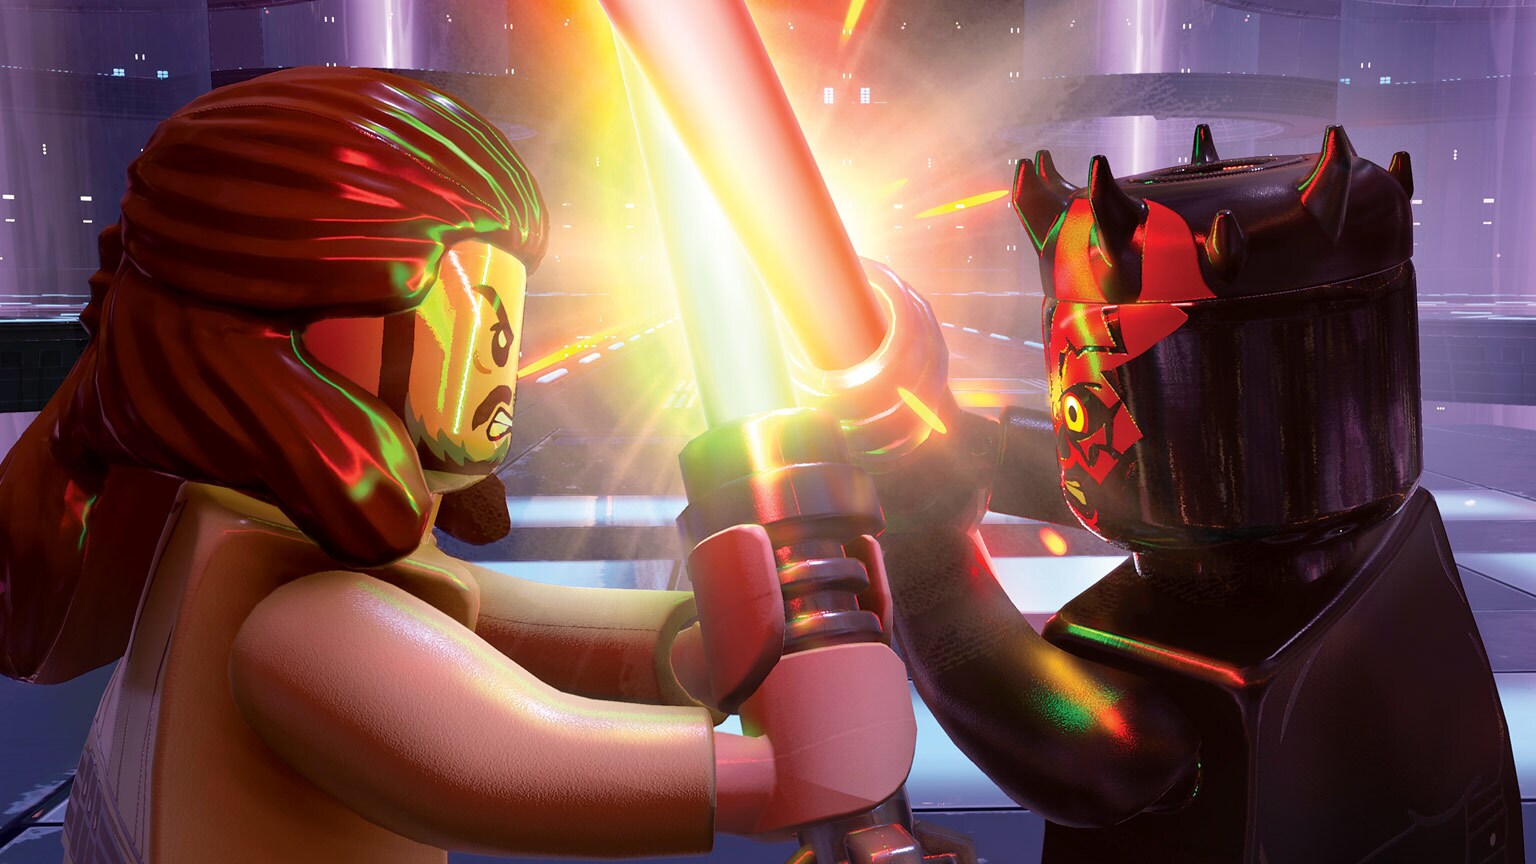 LEGO Star Wars: Skywalker Saga Reveals Surprising Clone Wars Content